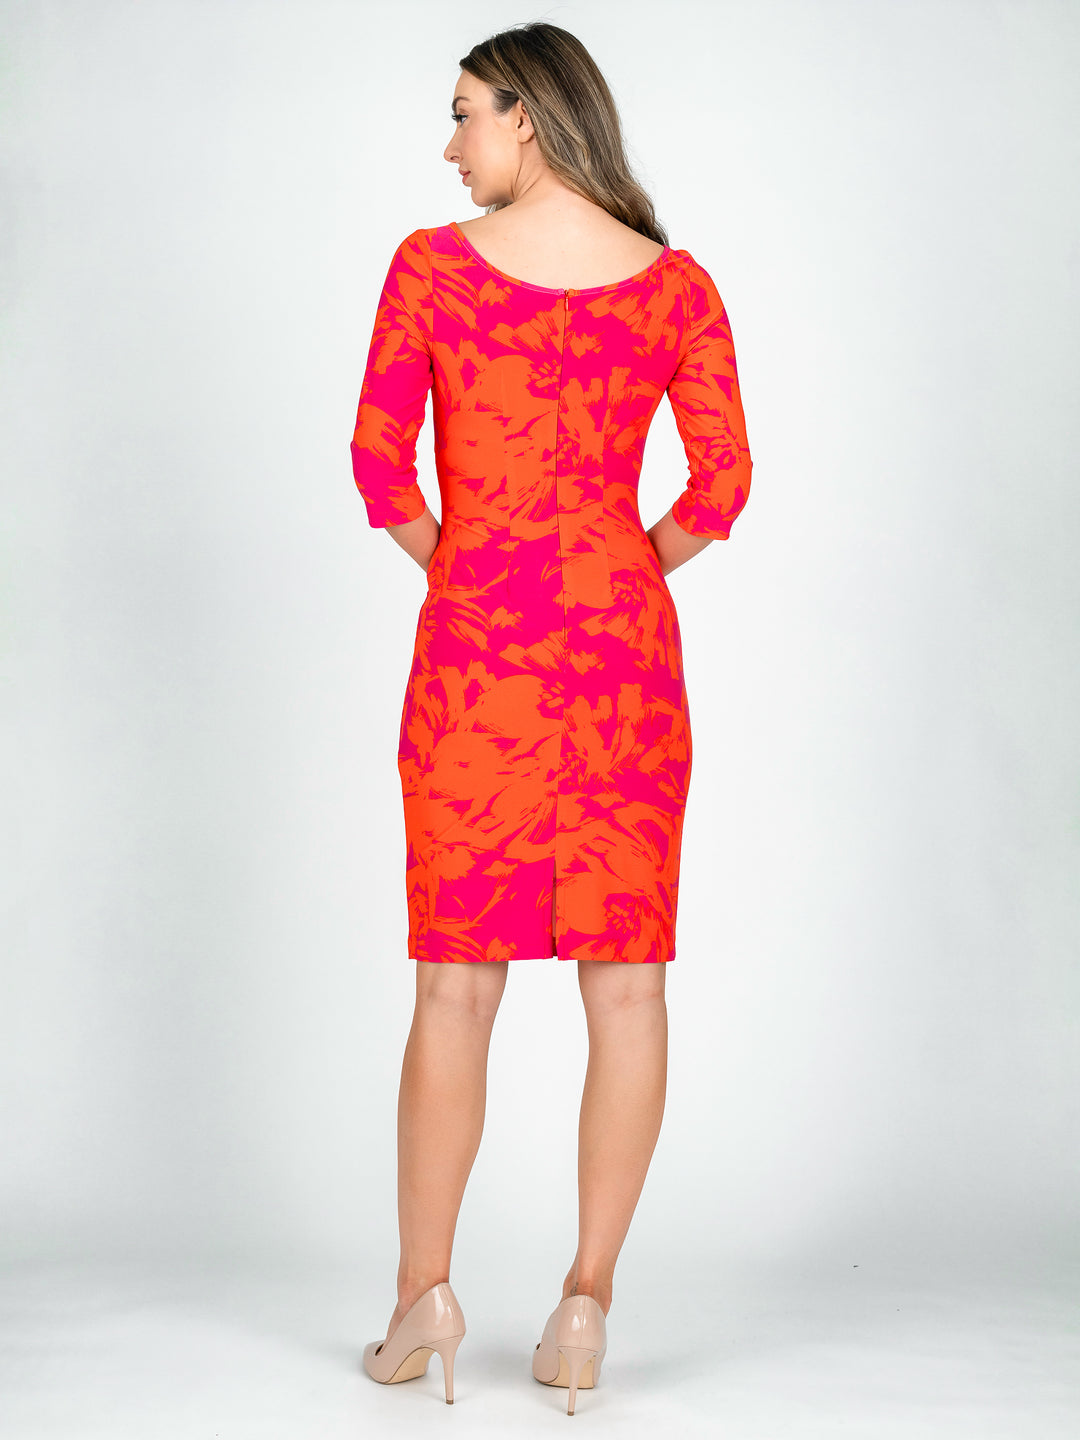 PALM SPRINGS 3/4 Sleeve Jersey Dress